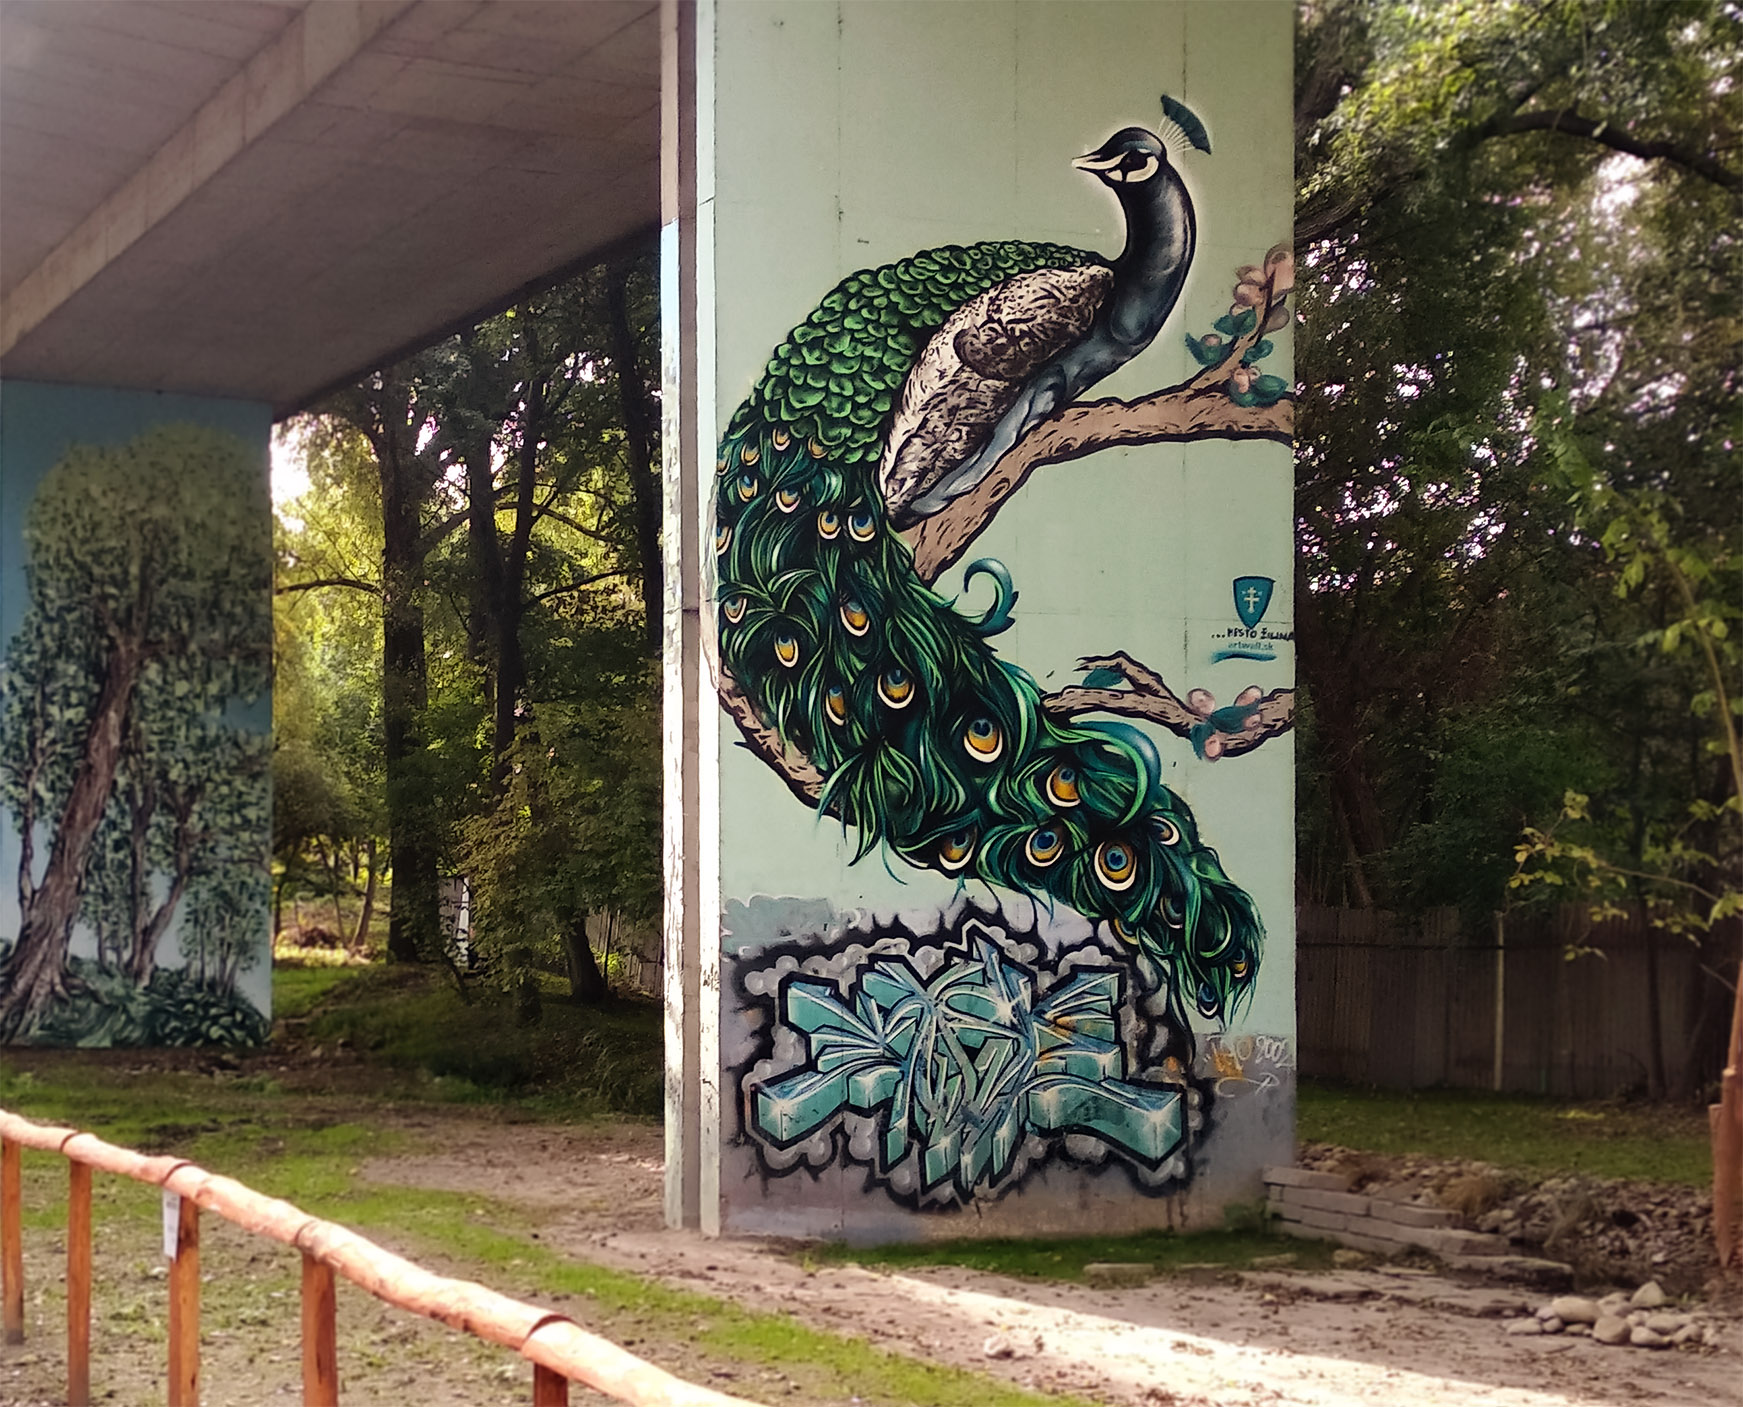 Peacock_street art